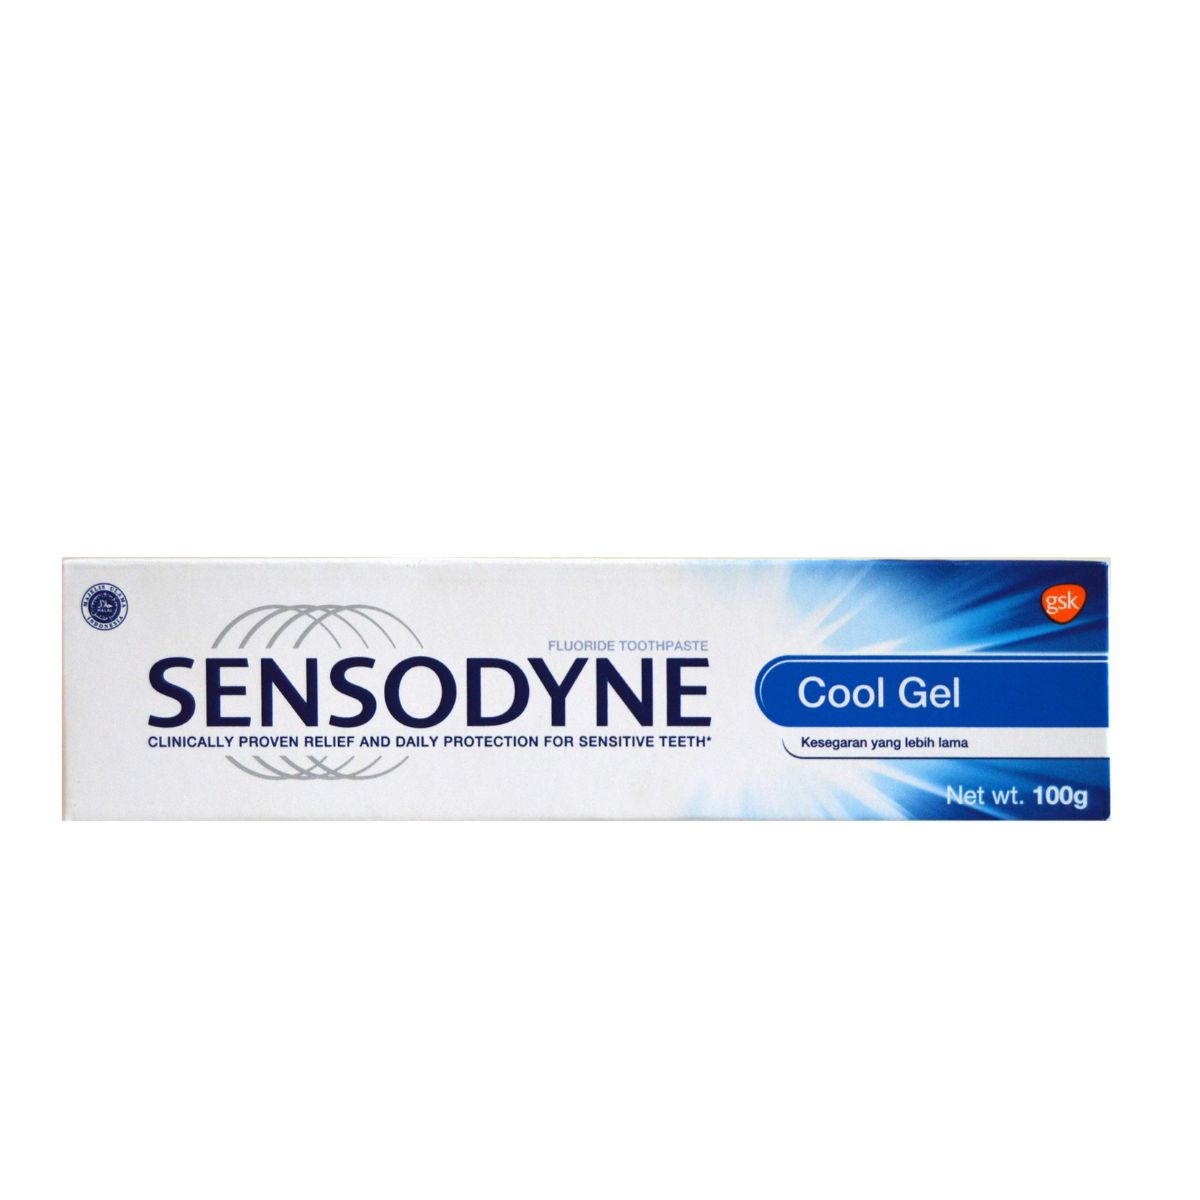 Sensodyne Fluoride Toothpaste - Cool Gel